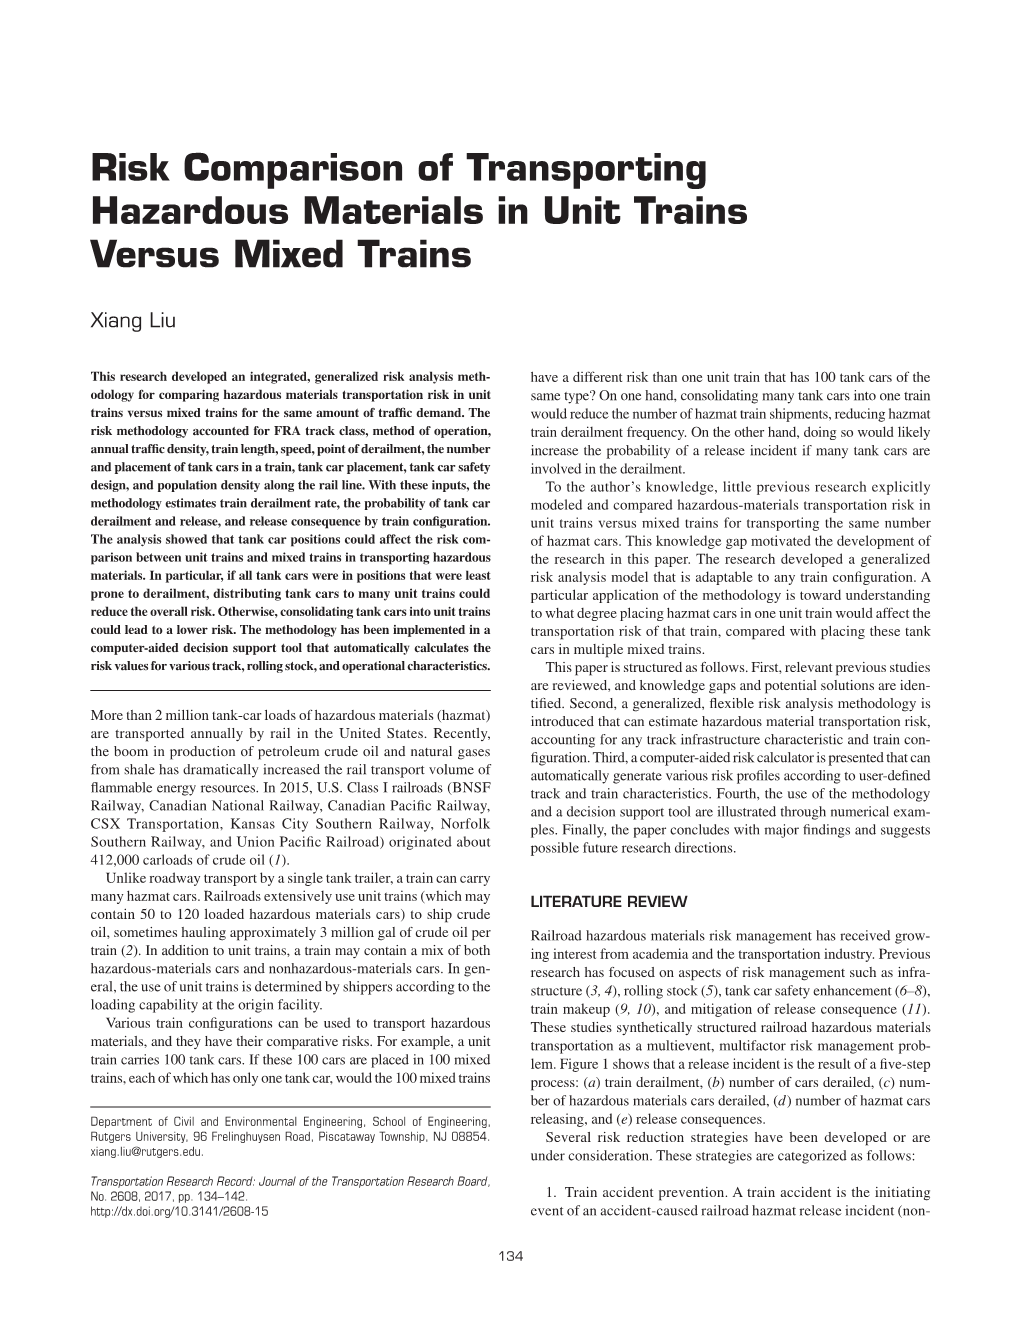 Risk Comparison of Transporting Hazardous Materials in Unit Trains Versus Mixed Trains